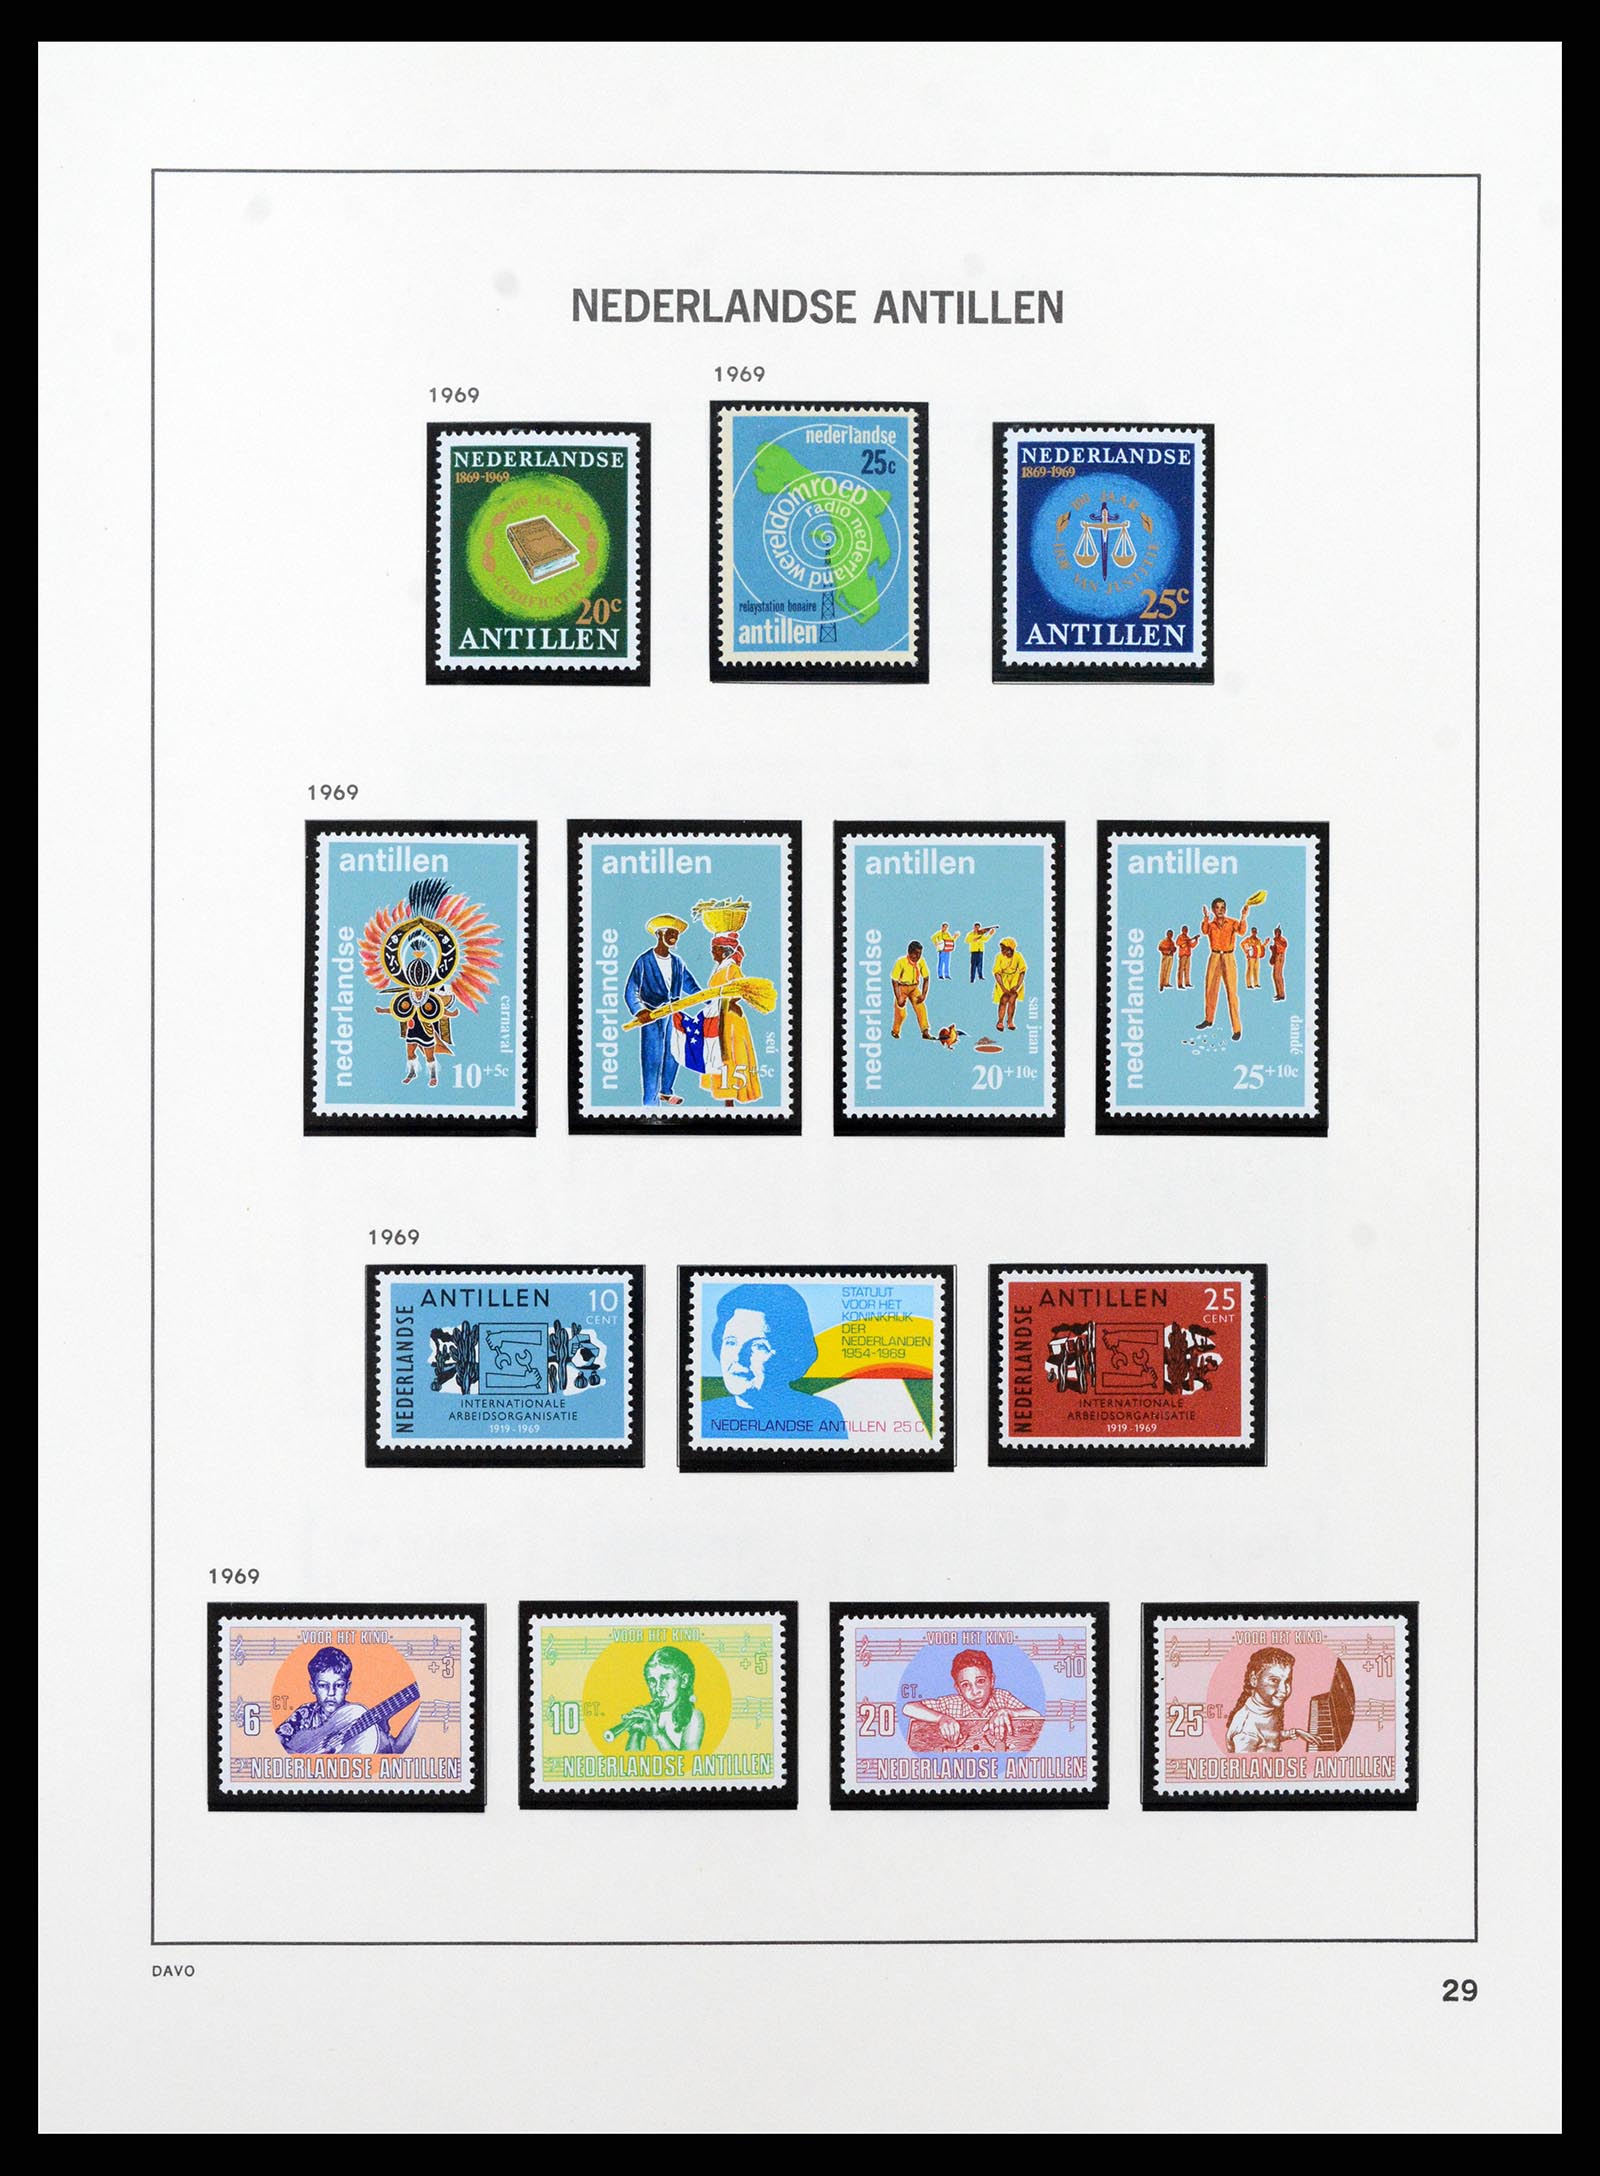 37682 024 - Stamp collection 37682 Netherlands Antilles.